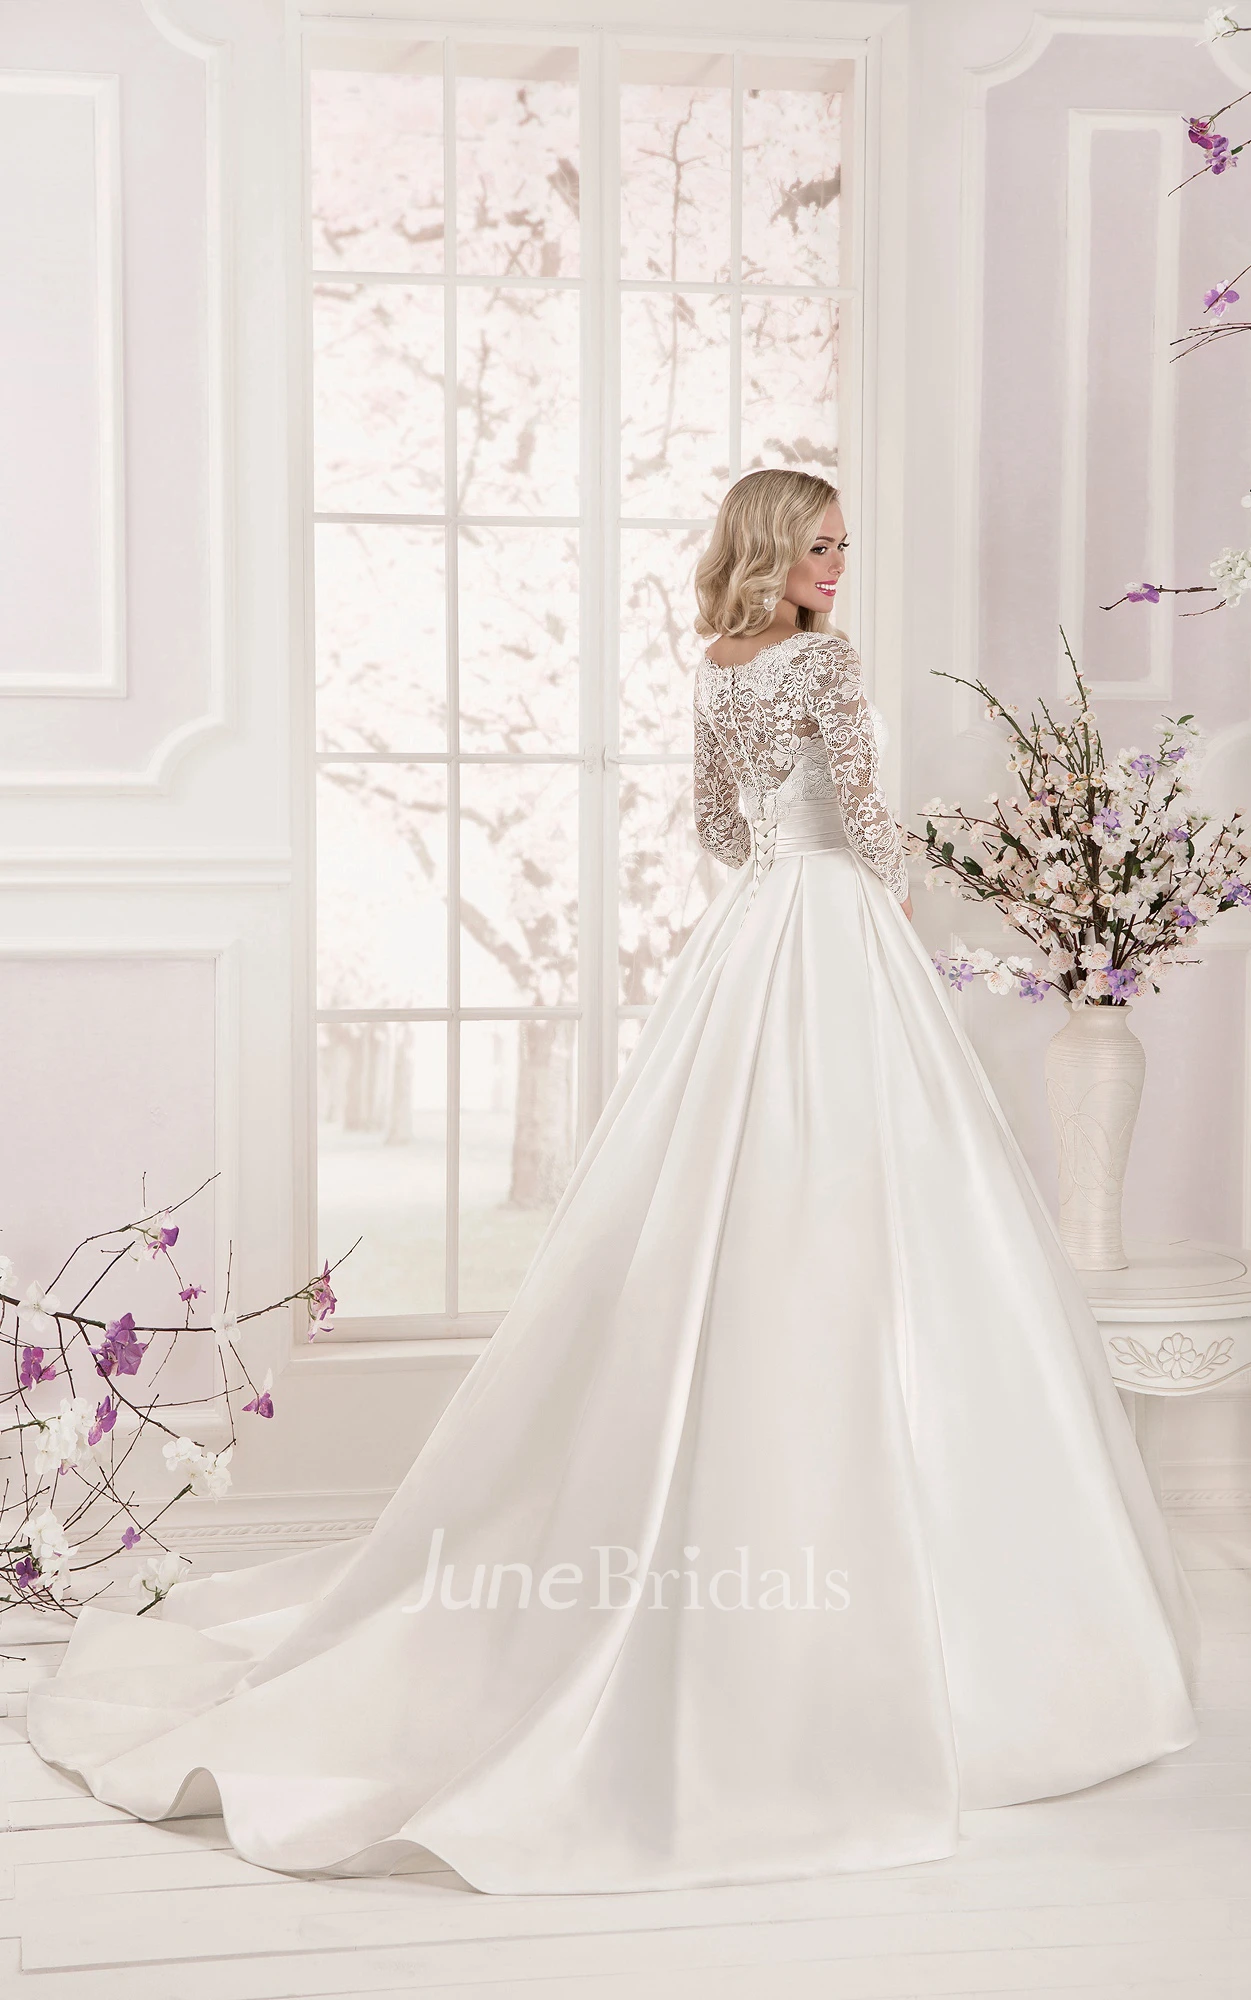 Lace Top Long Sleeve Floor Length Satin Applique Dress - June Bridals